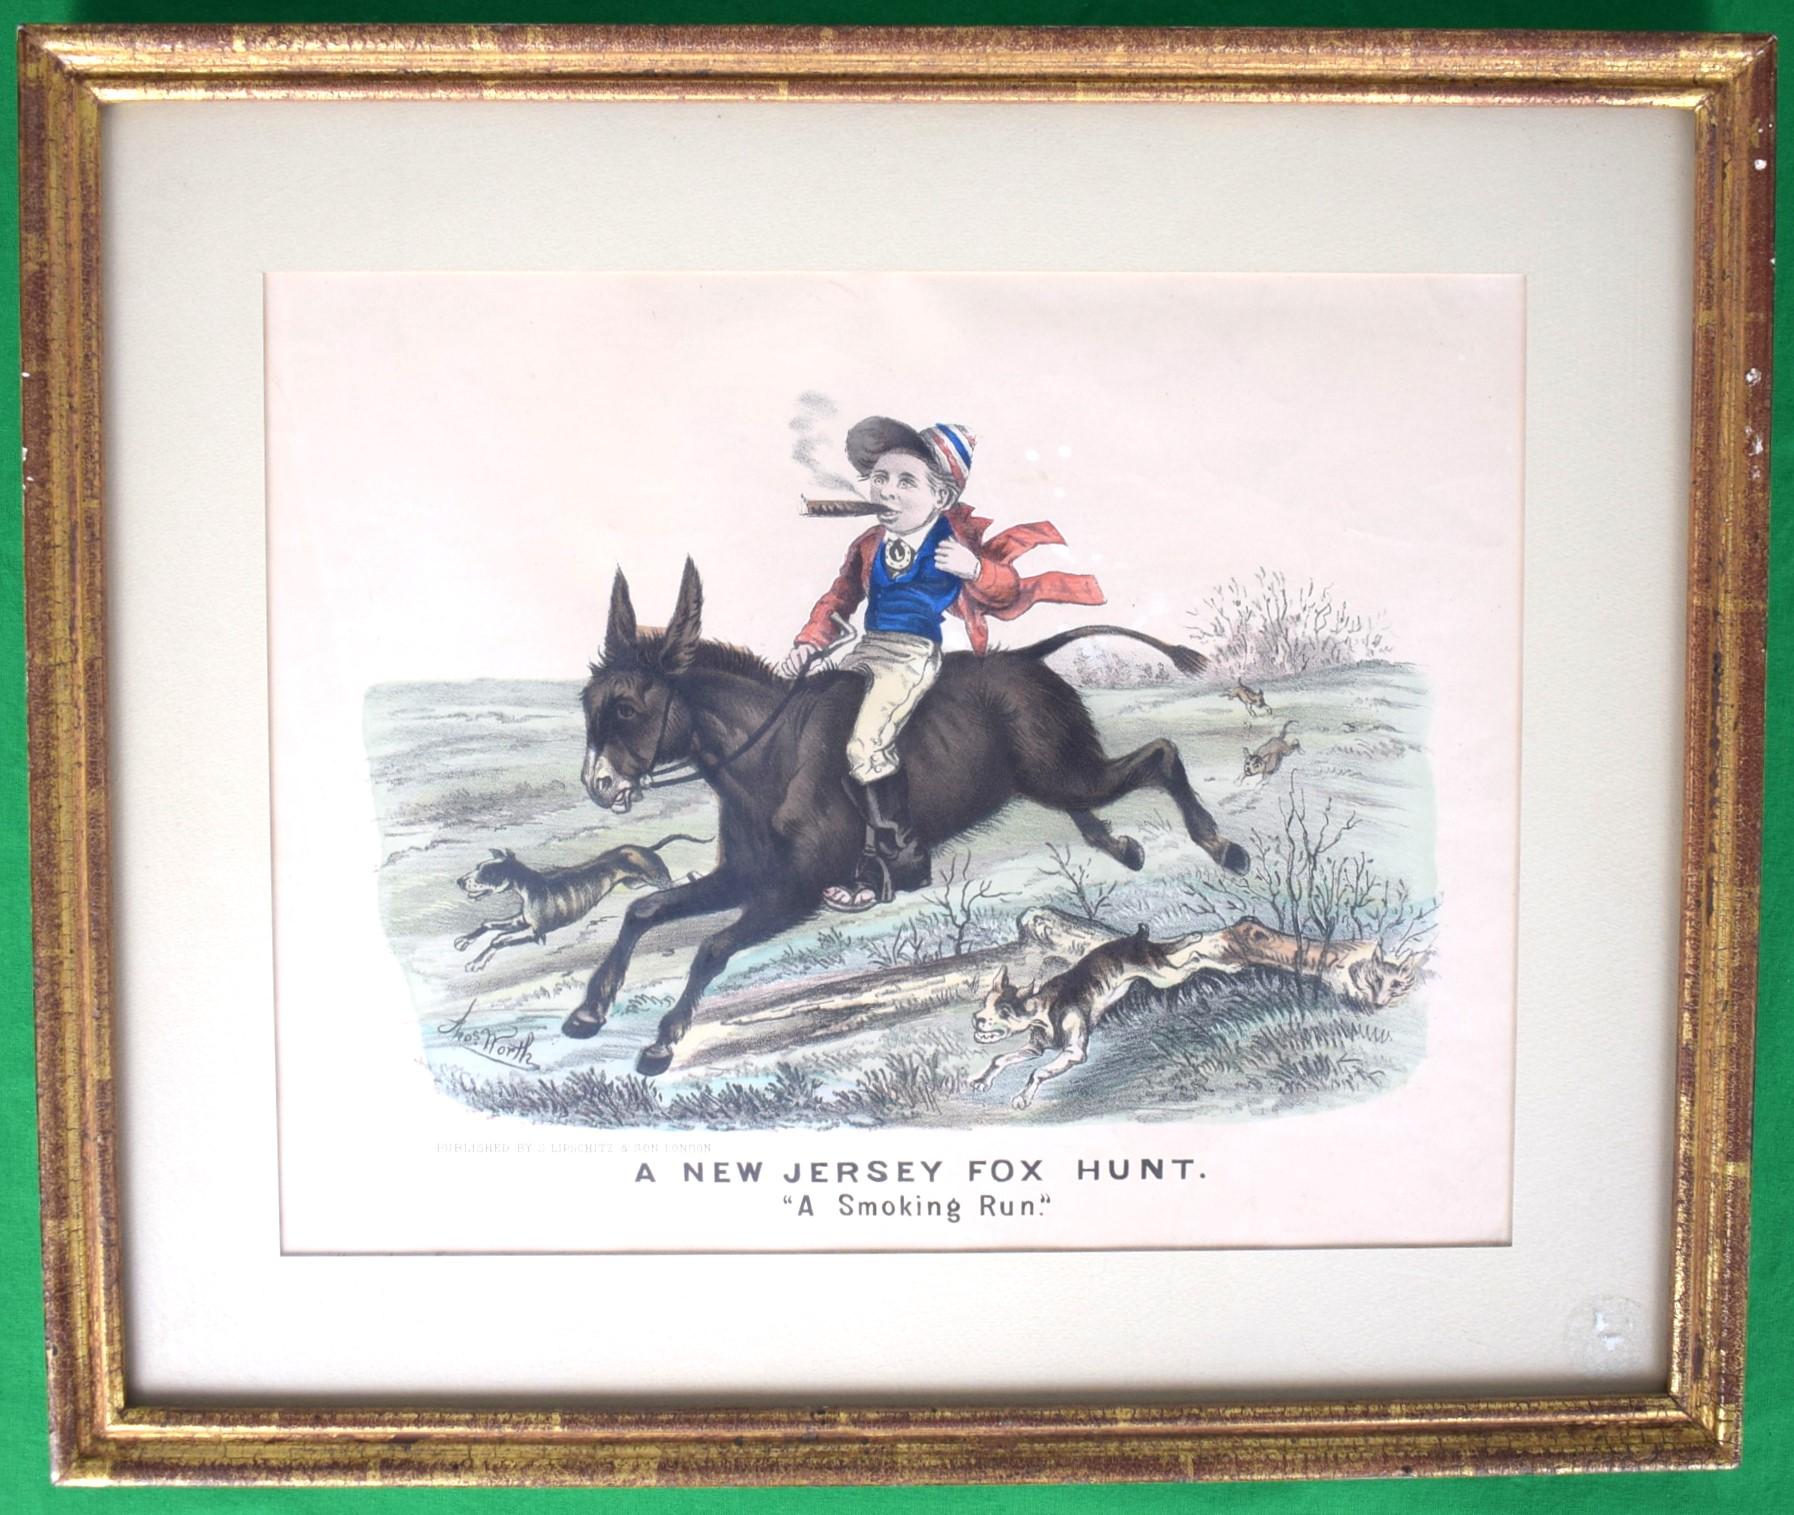 A New Jersey Fox Hunt. "A Smoking Run" by Thomas Worth - Print by Thomas Worth 